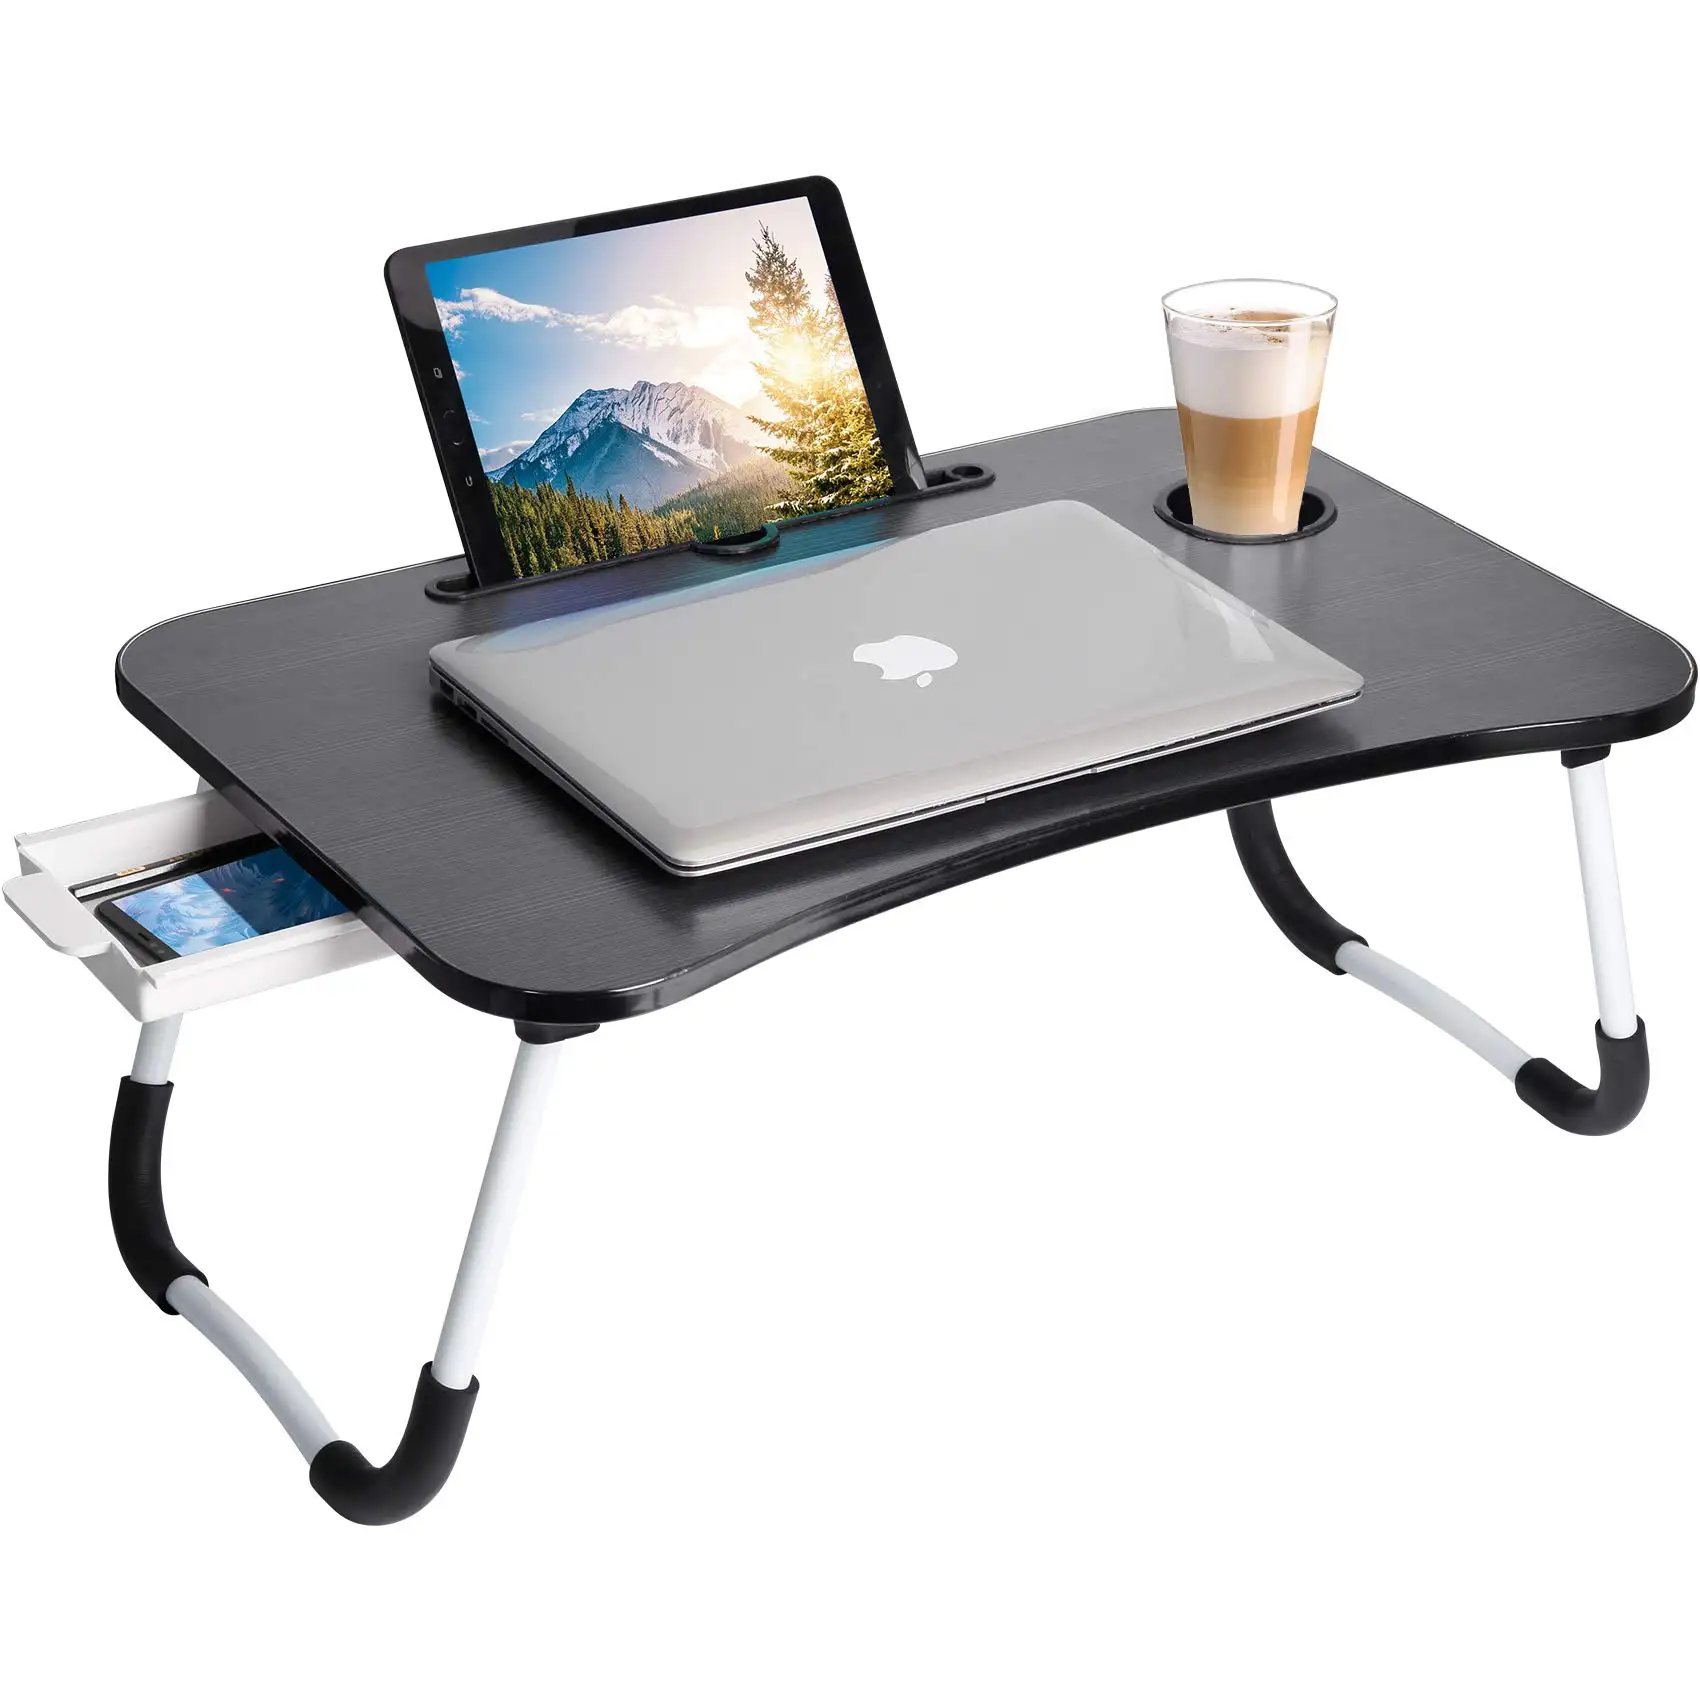 बहुउद्देशीय रंगीन डिजाइन तह छोटे आधुनिक अध्ययन बिस्तर डेस्क Foldable लैपटॉप कंप्यूटर टेबल के साथ कप धारक